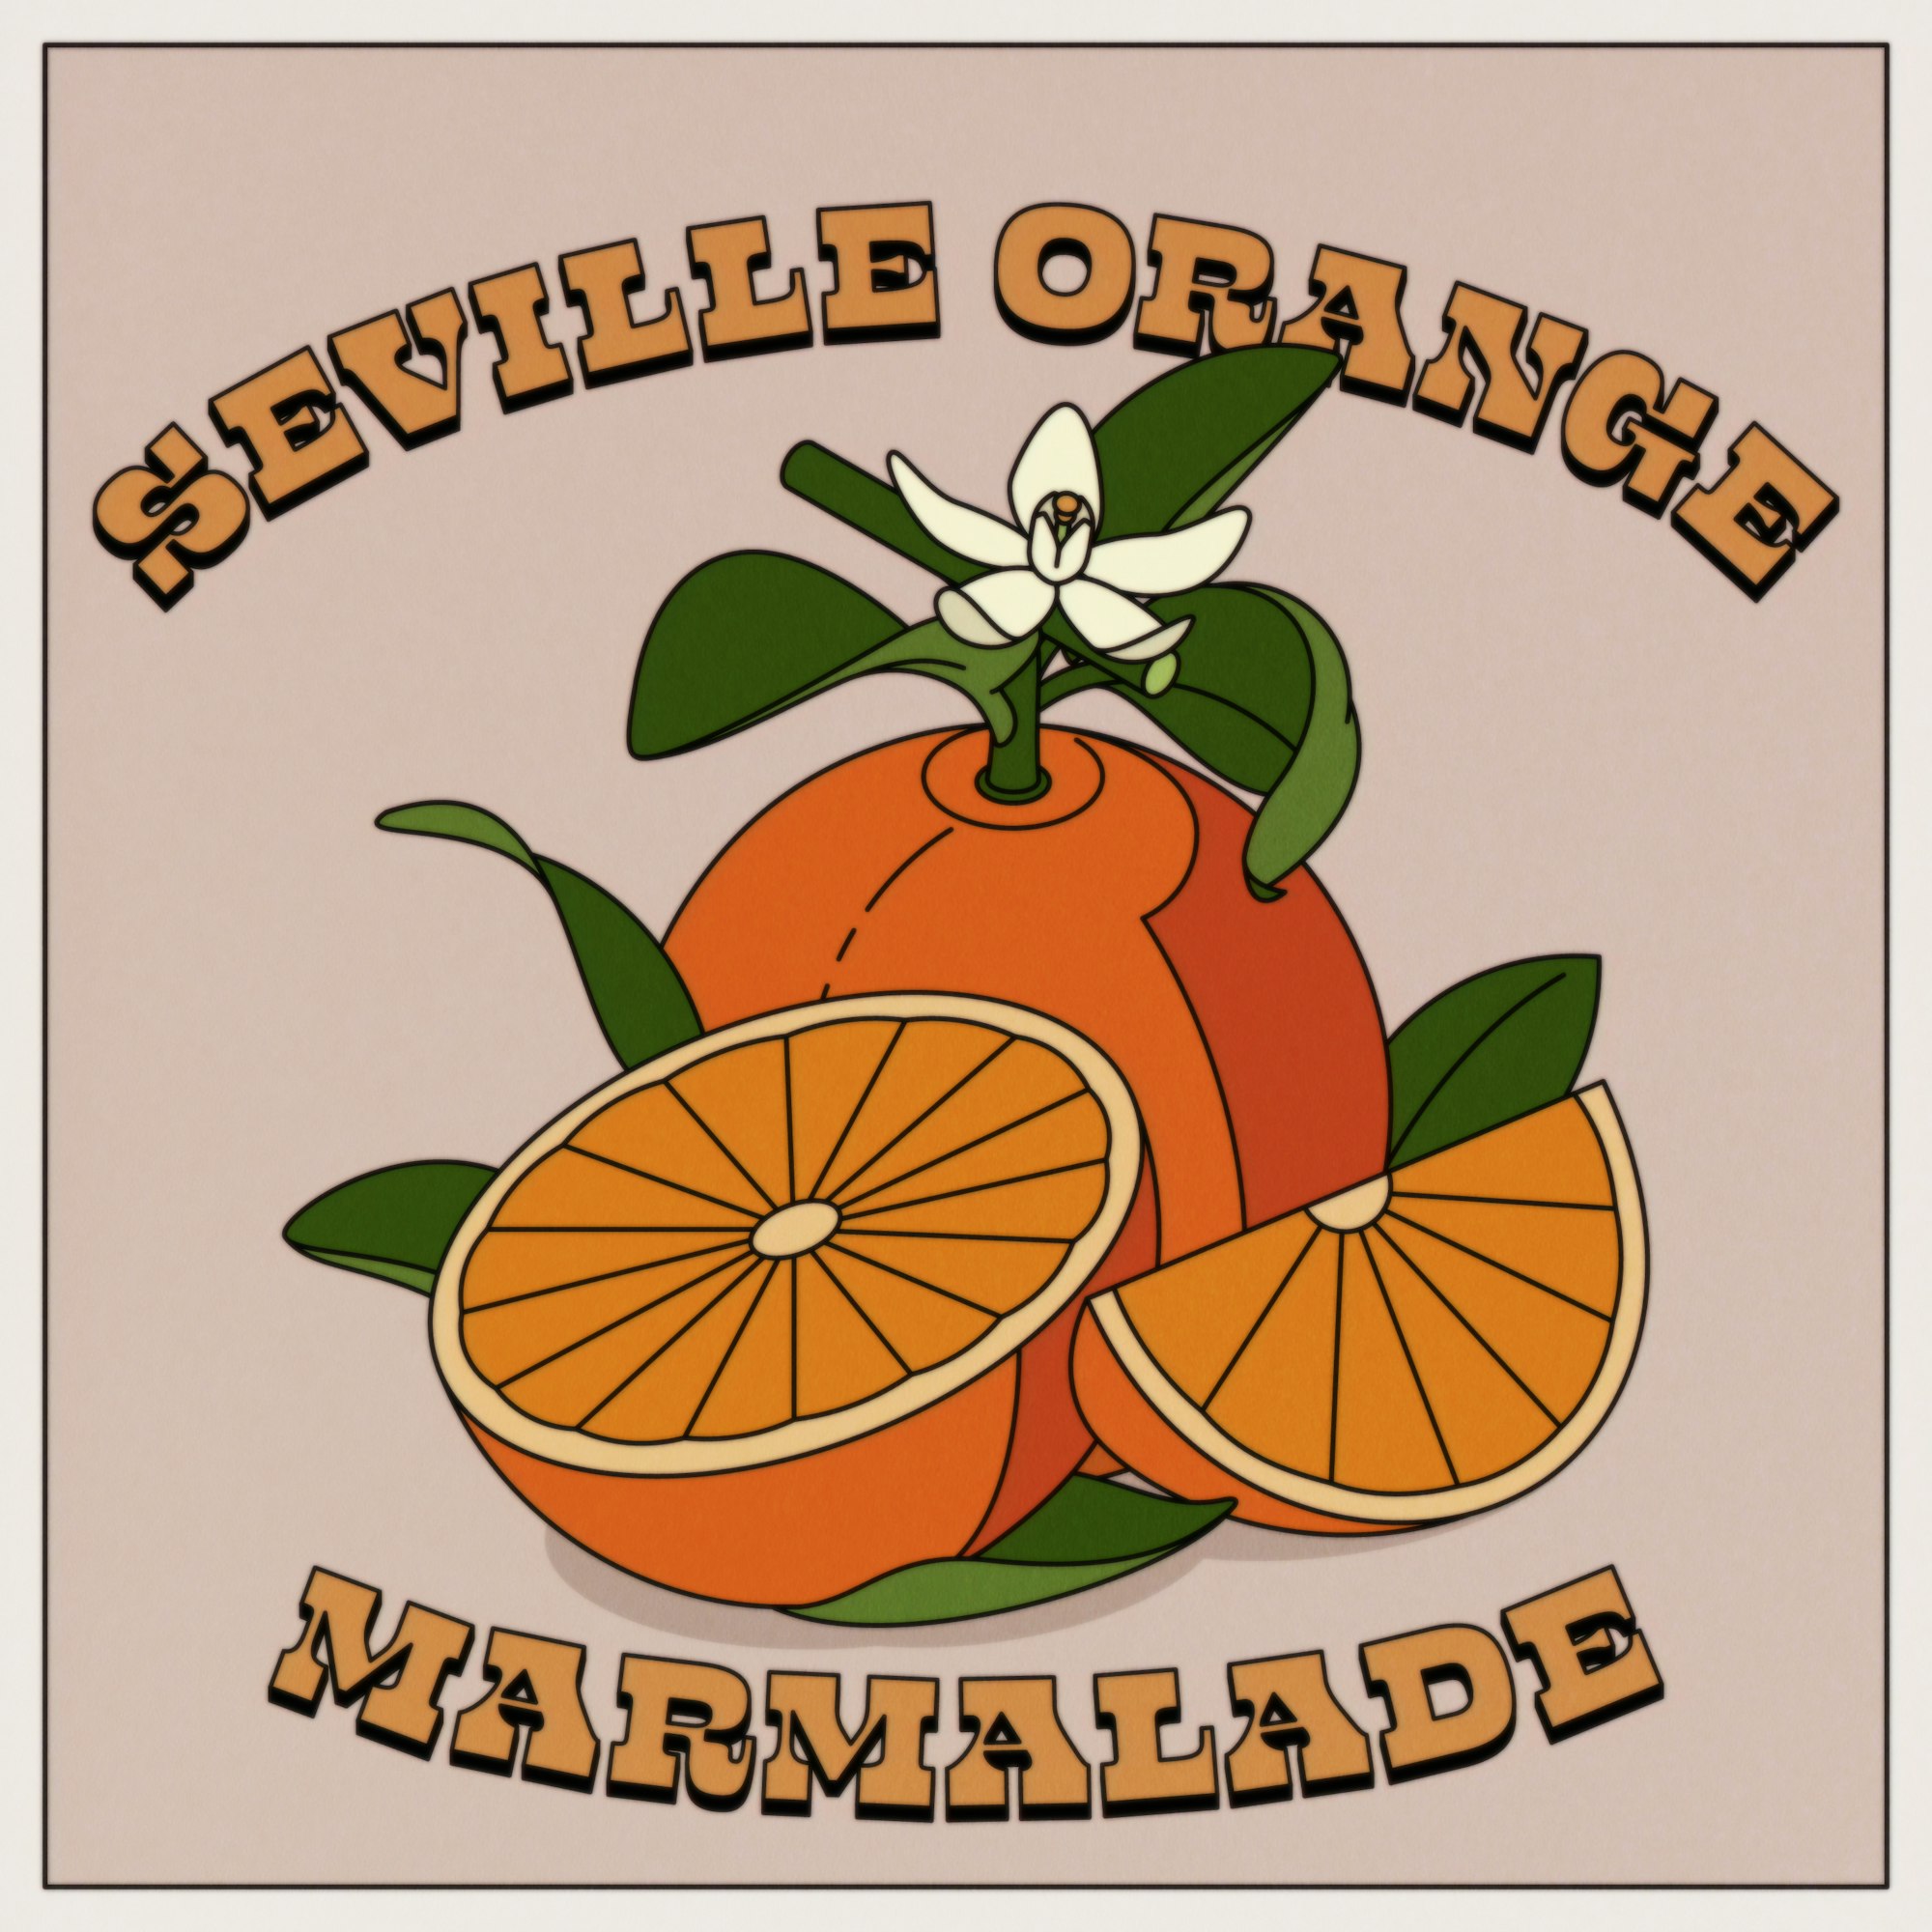 Emile - Seville orange marmalade